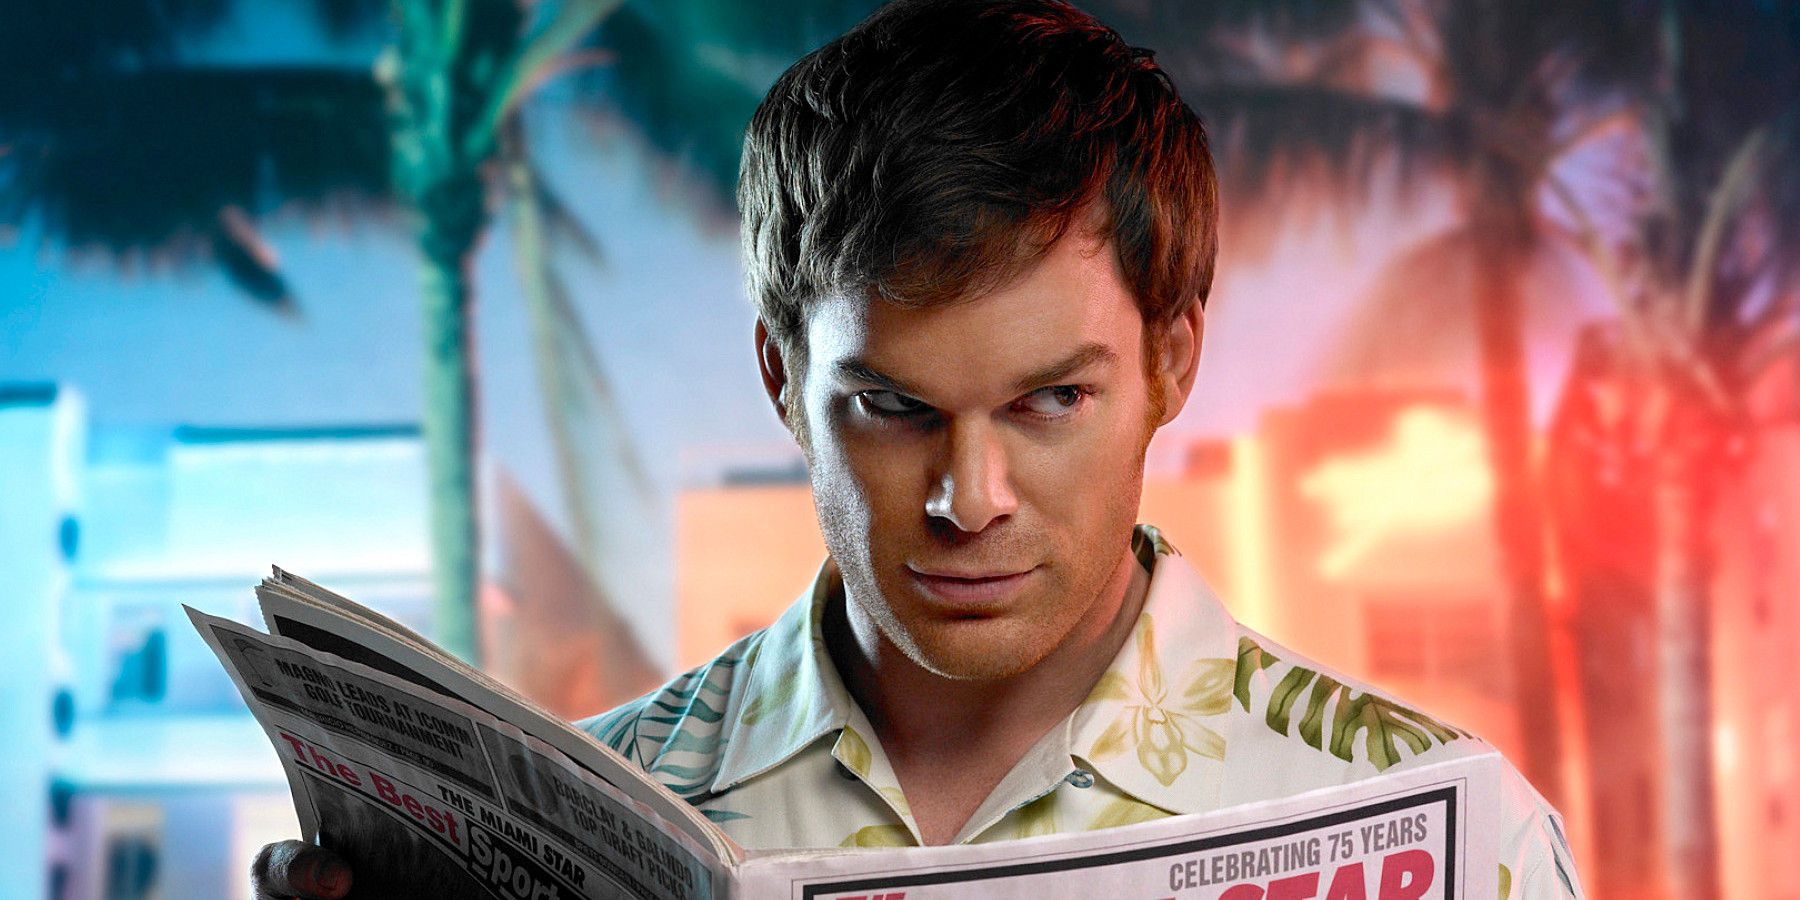 Dexter on Showtime